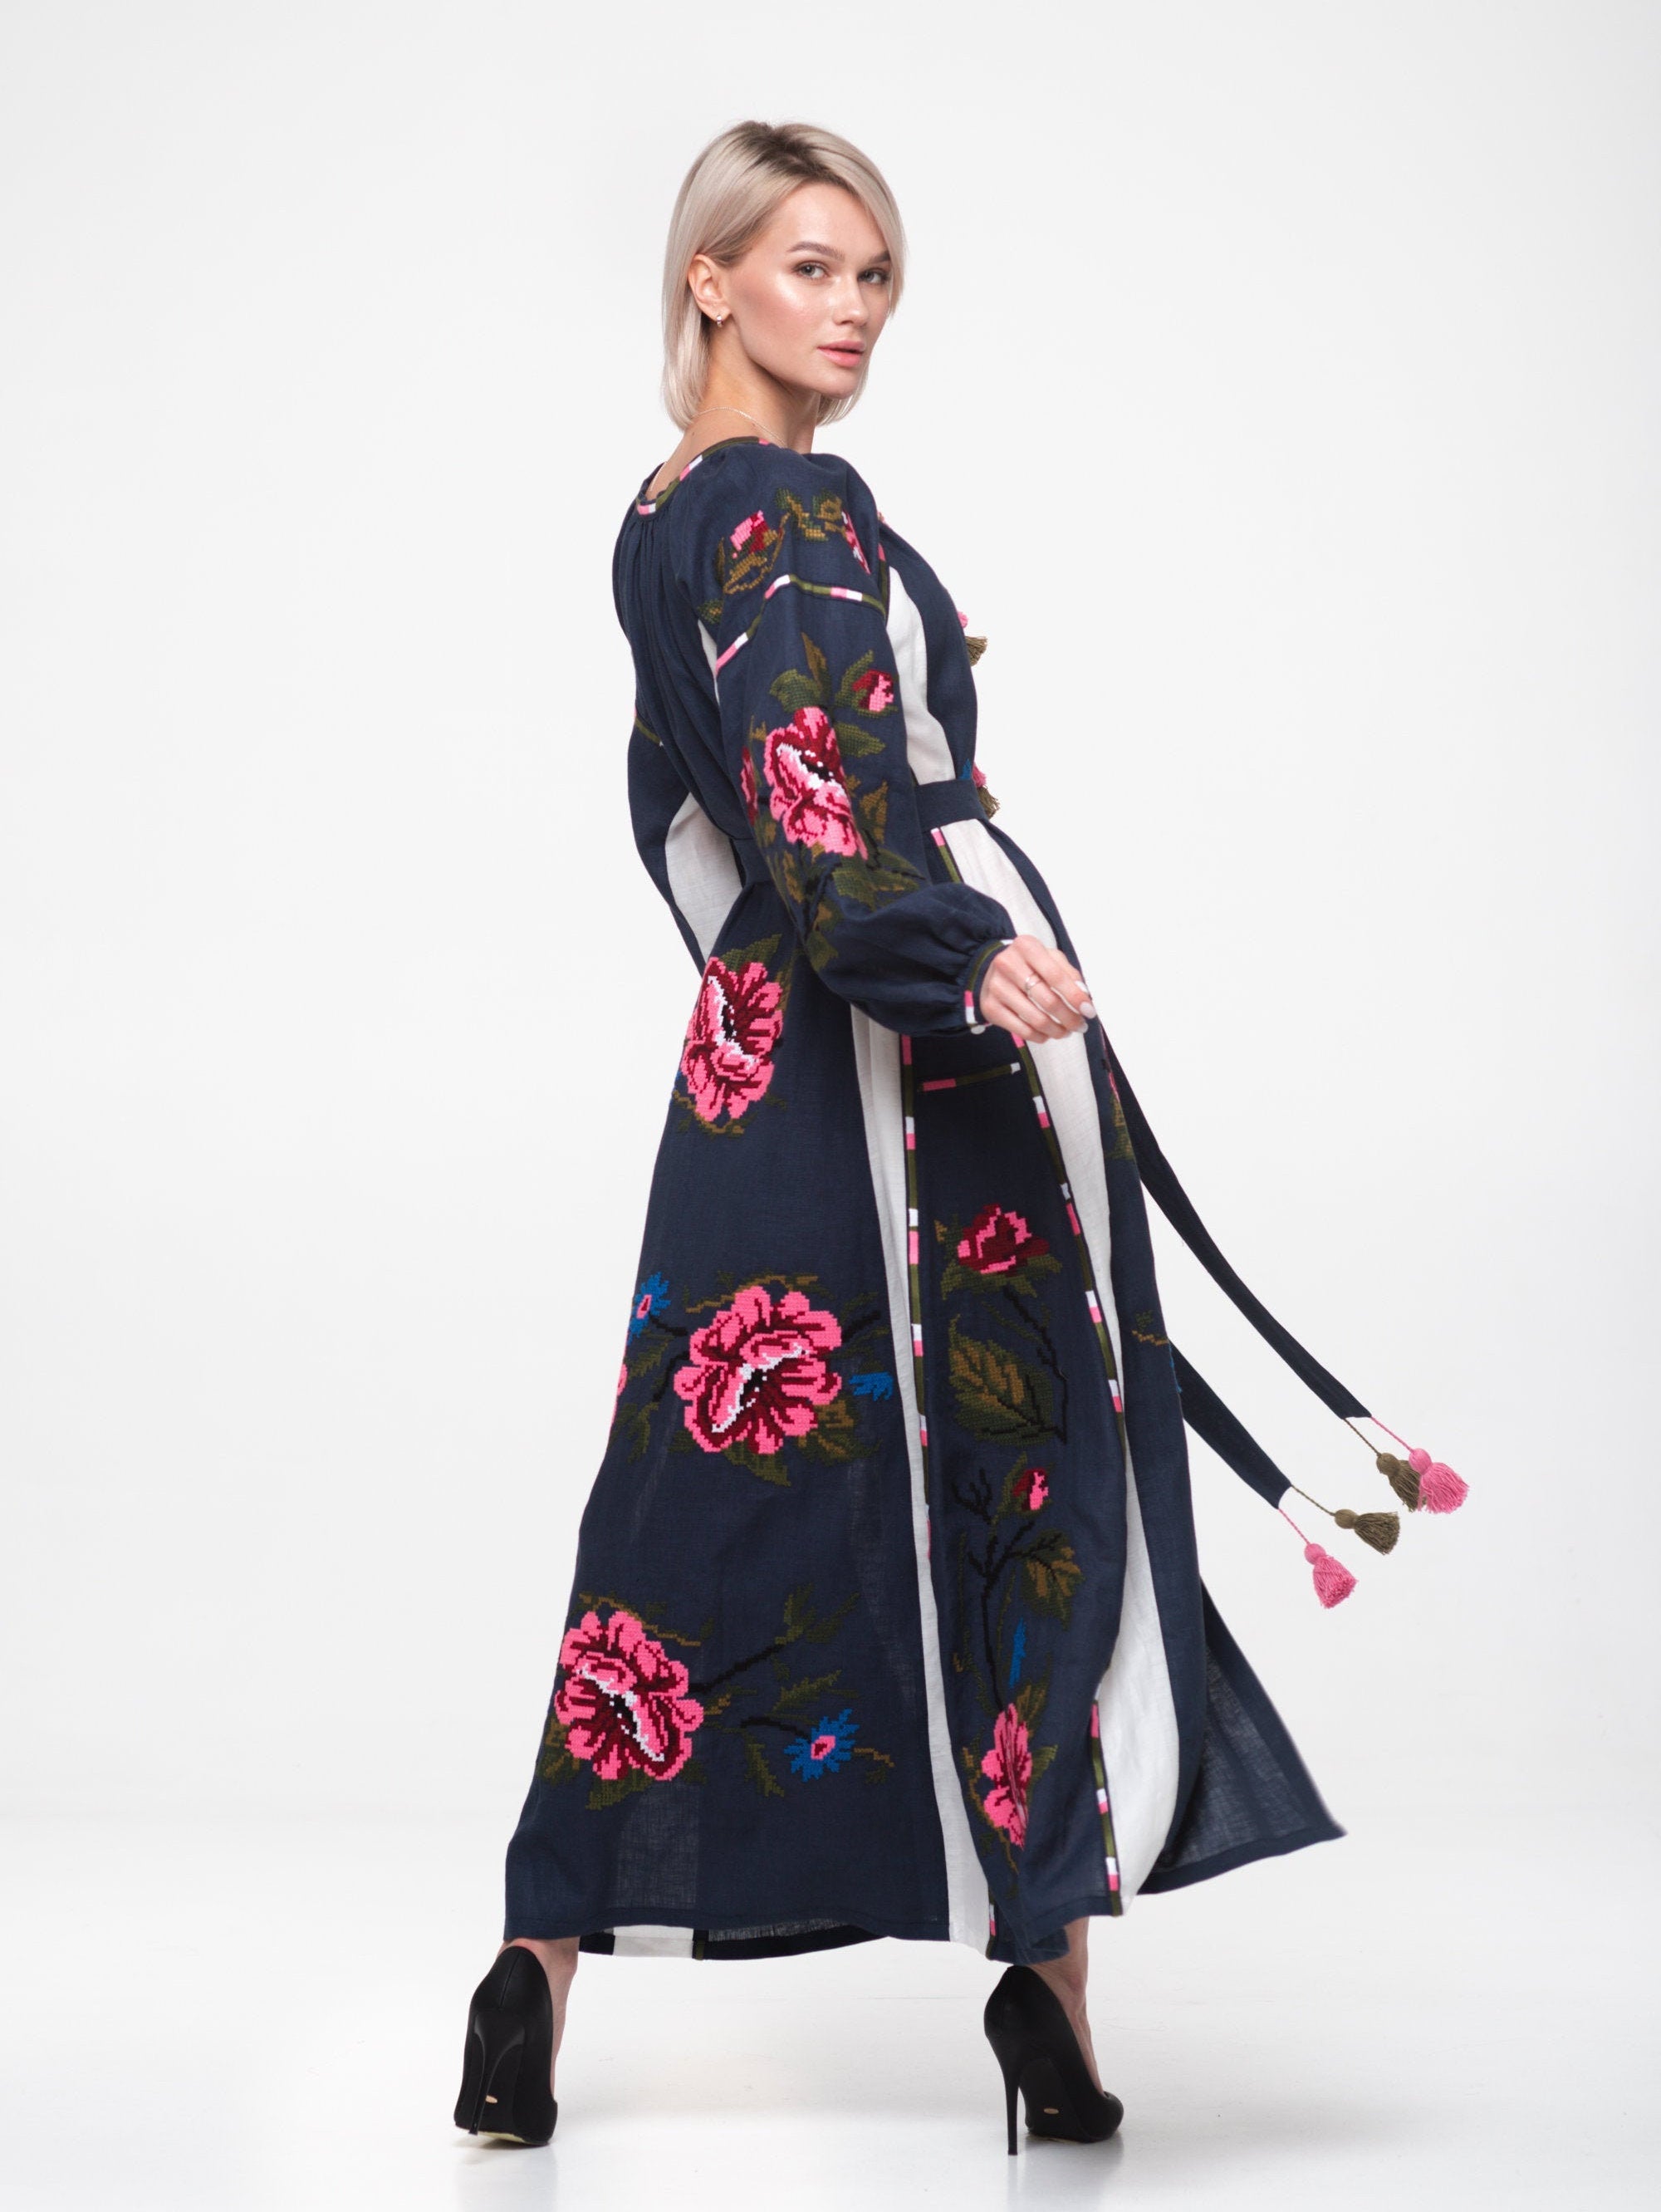 Embroidered linen dress kaftan maxi Fashion bohemian outfit Navy